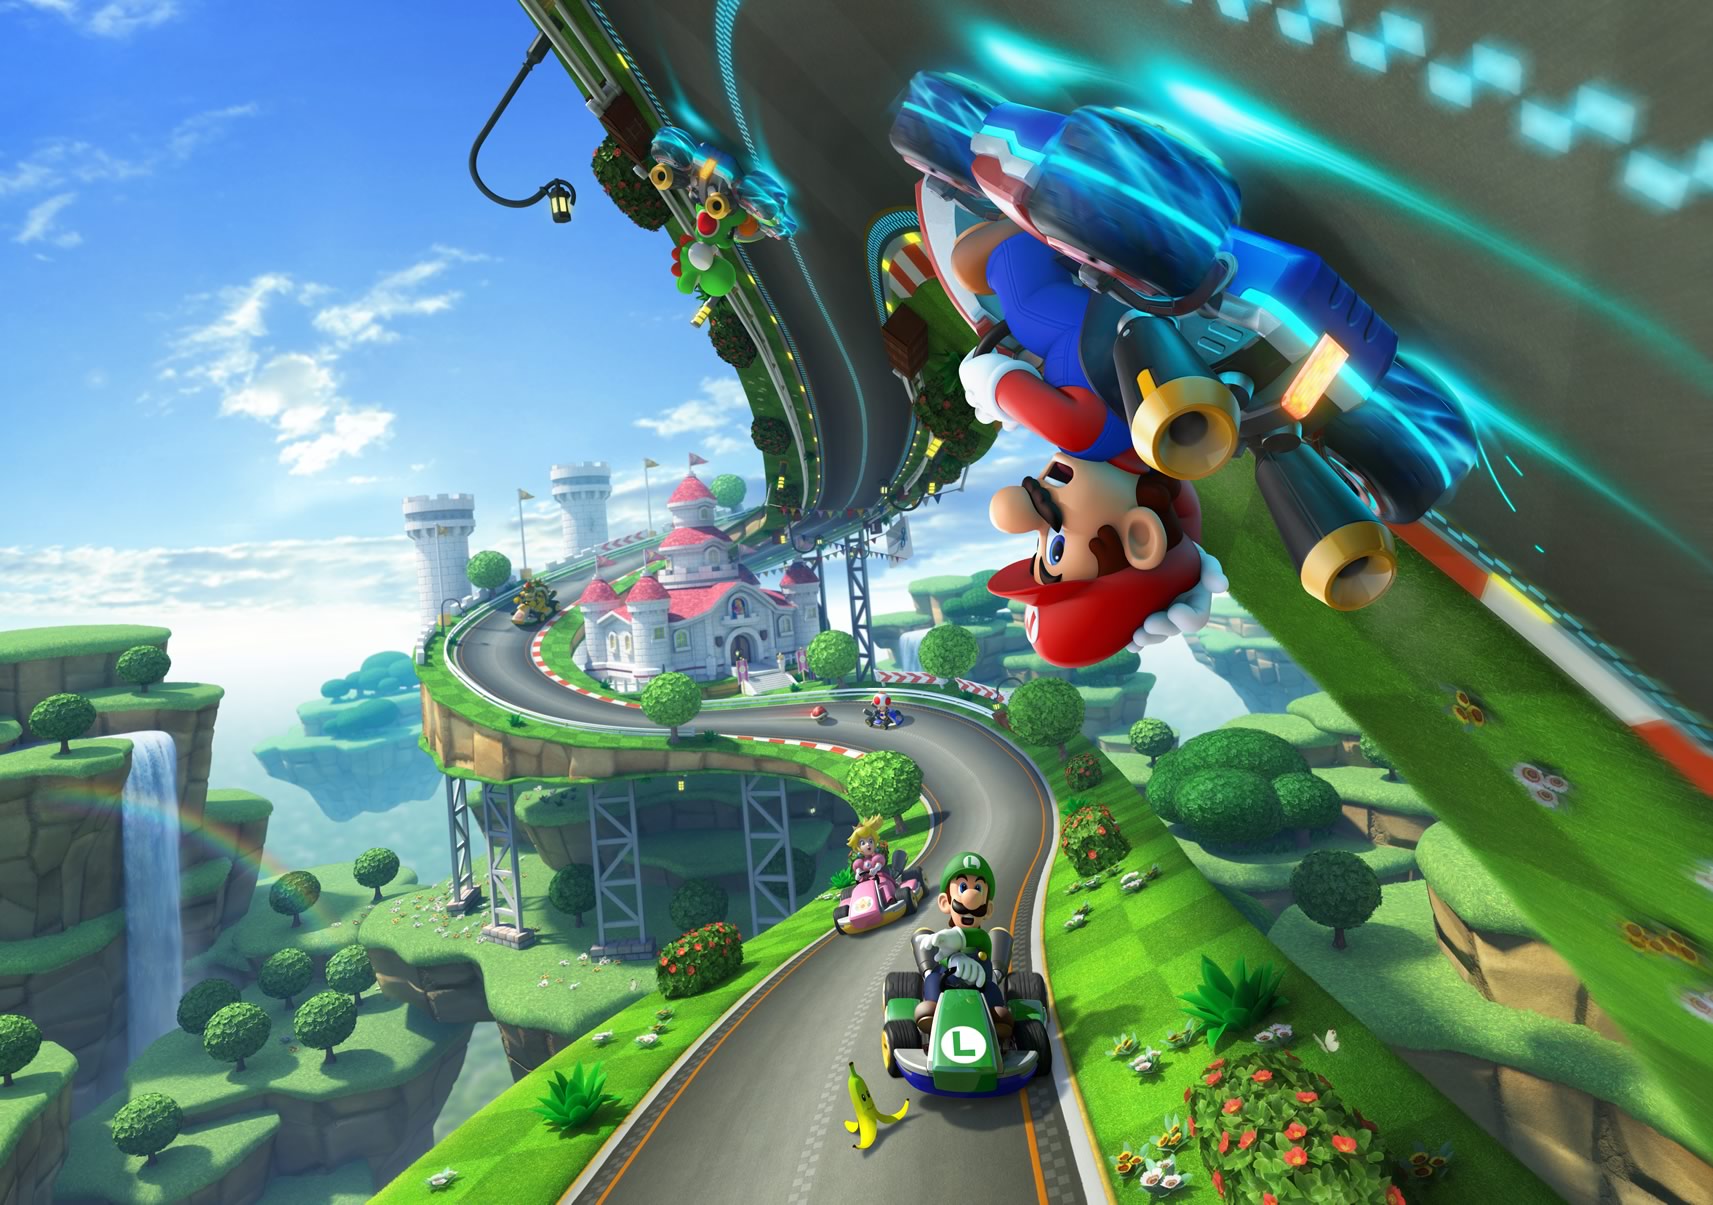 Mario Kart 8 Direct Game Chat Free Digital Game Wii U Bundle And More Pure Nintendo 4850